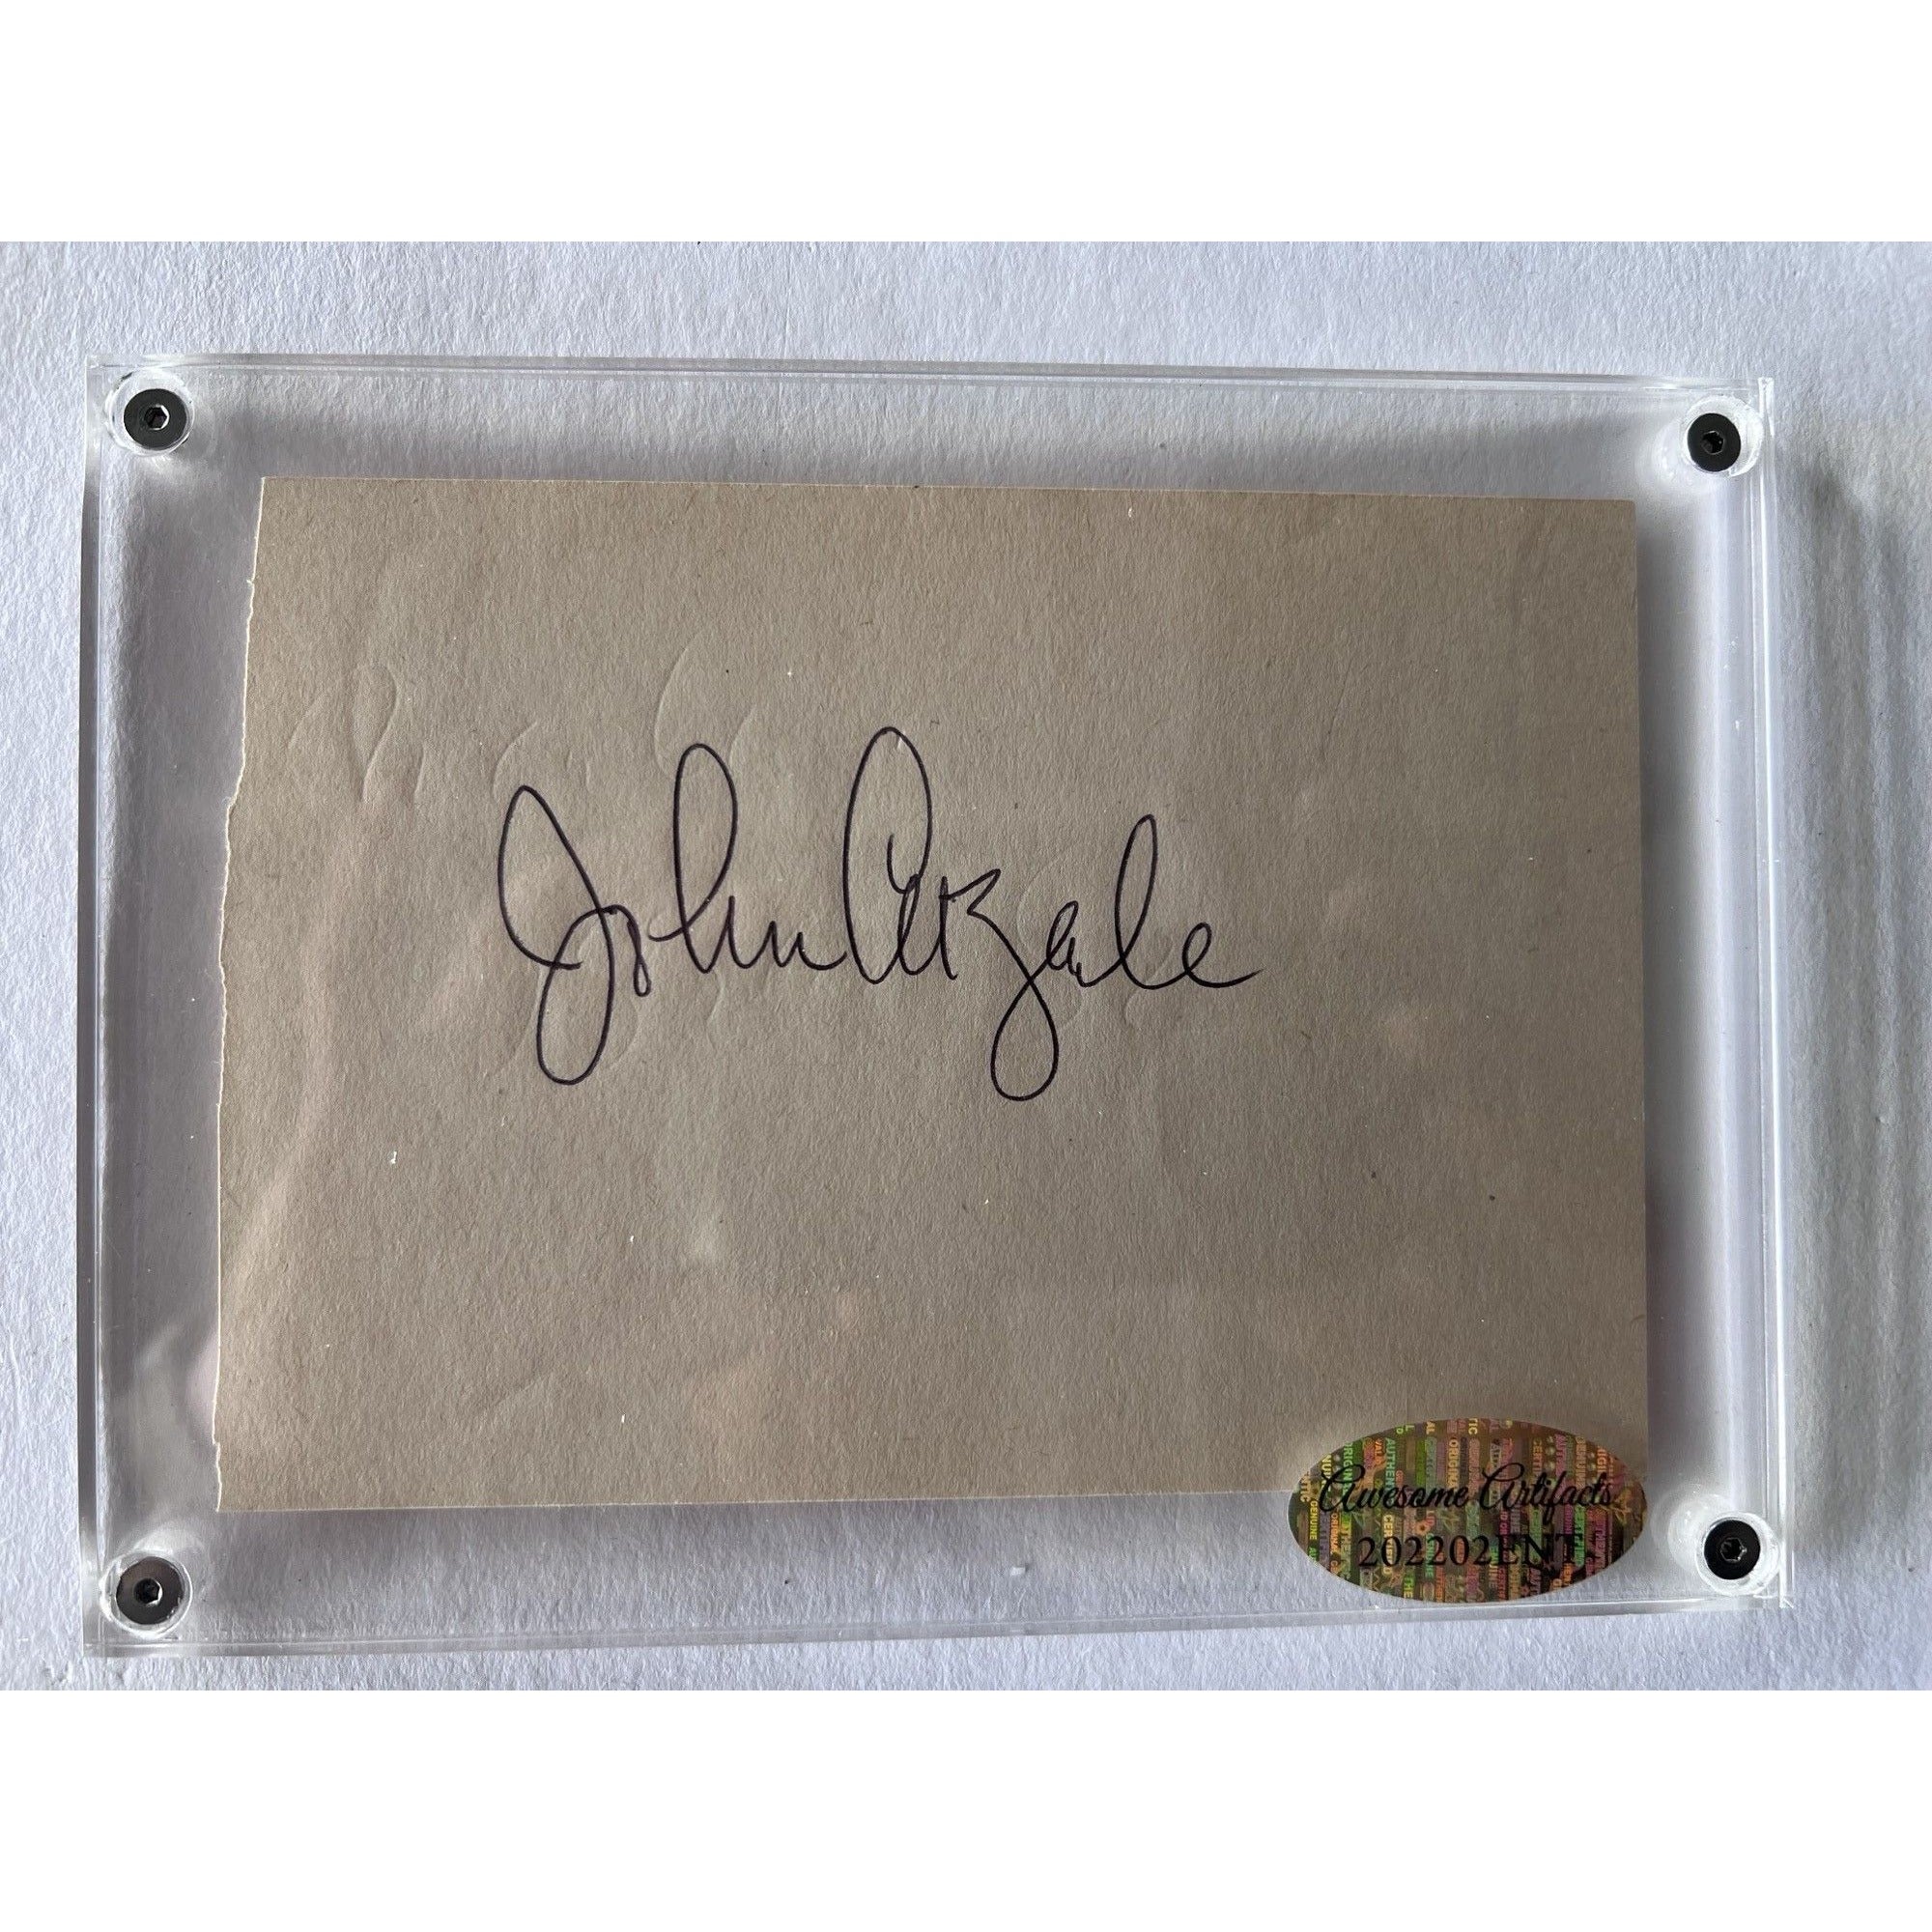 John Cazale "Fredo Corleone" The Godfather autograph book page signed